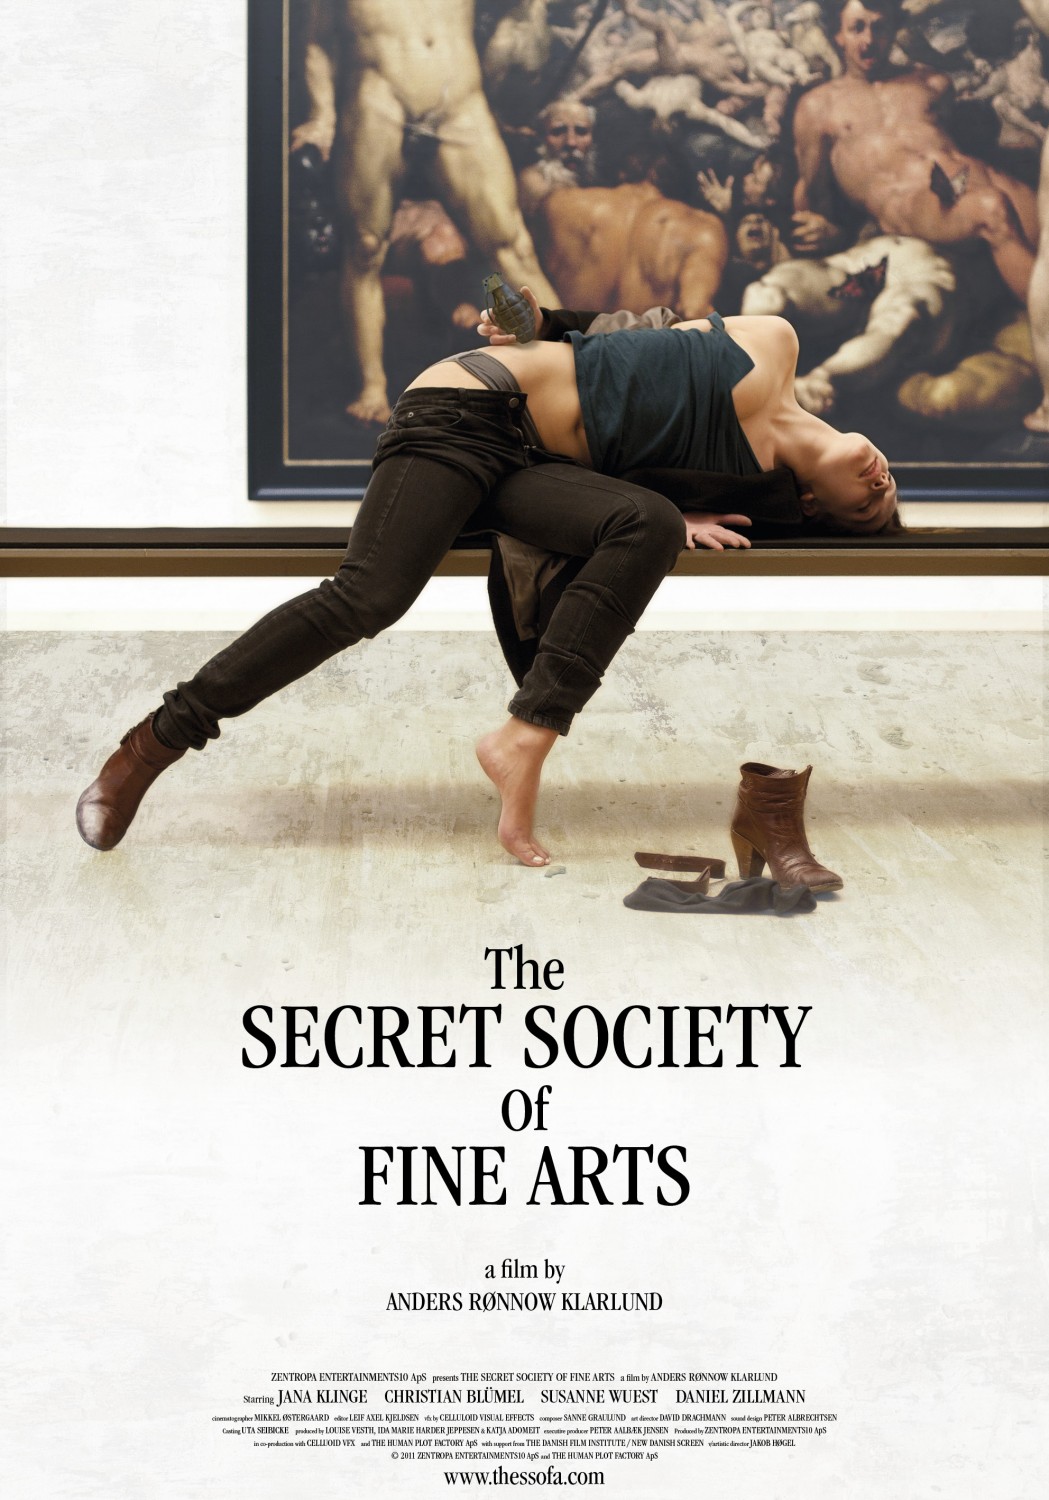 The Secret Society of Fine Arts (2012) Screenshot 2 